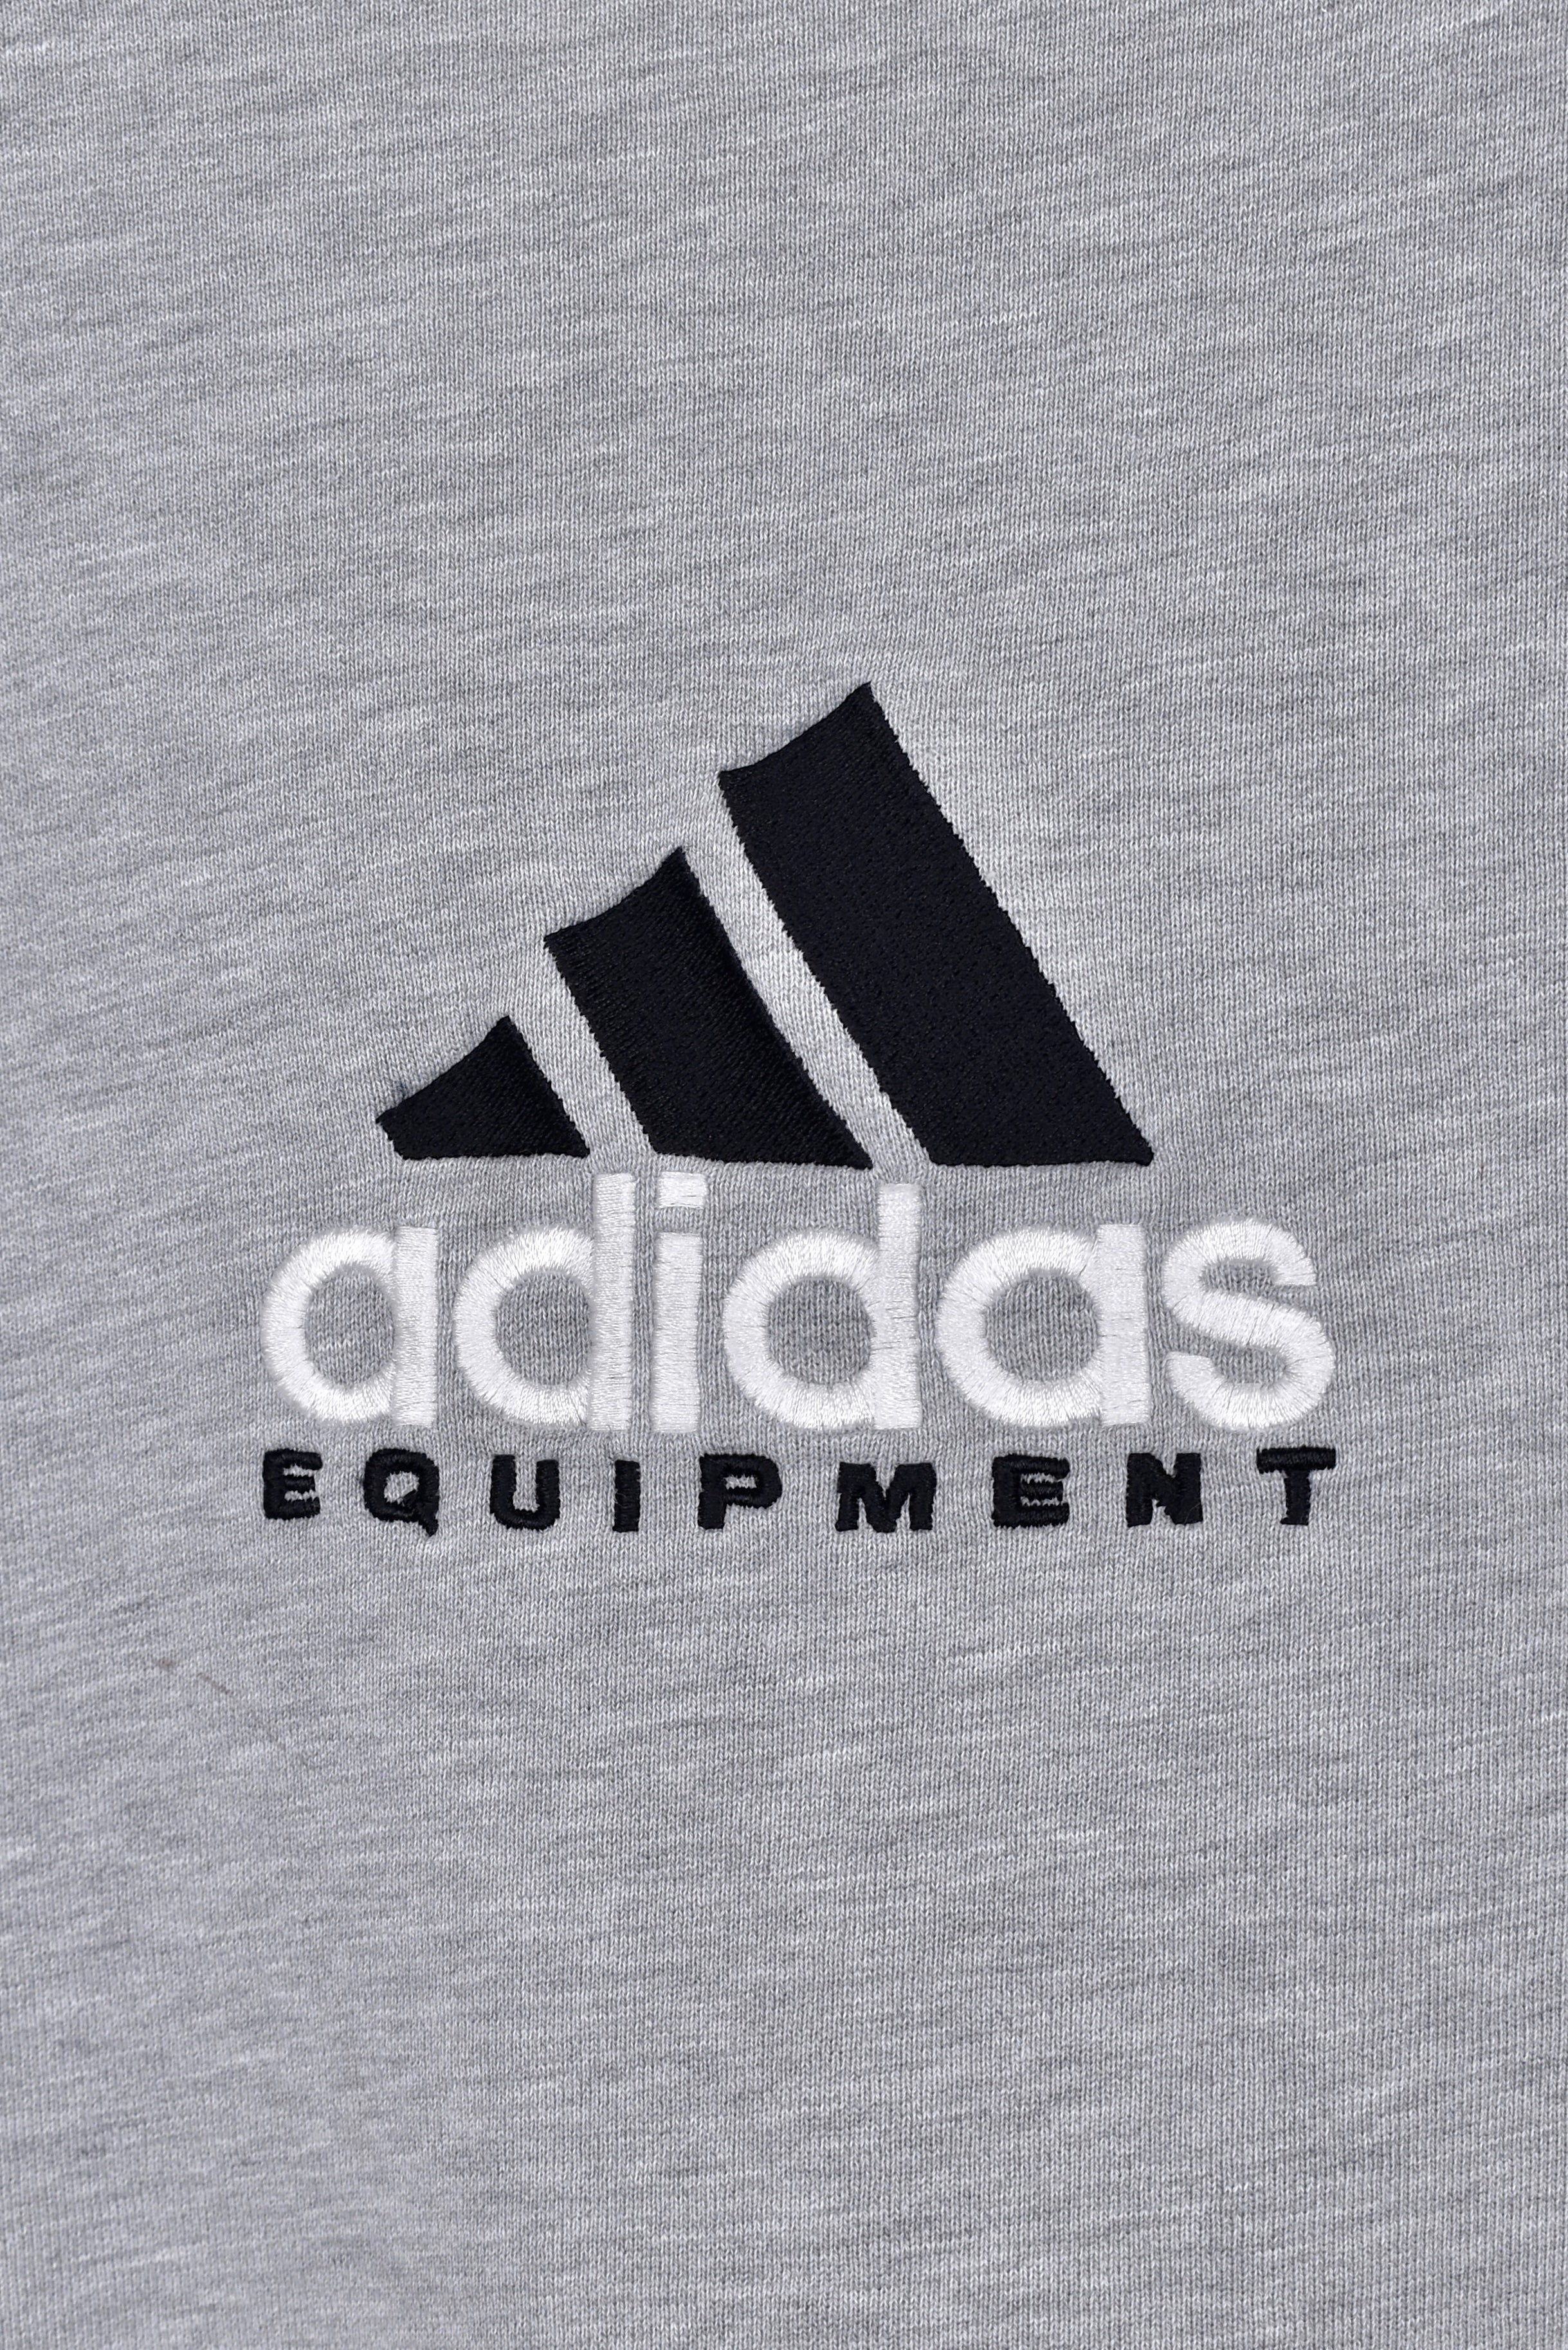 Vintage Adidas Equipment sweatshirt, grey embroidered crewneck - Large